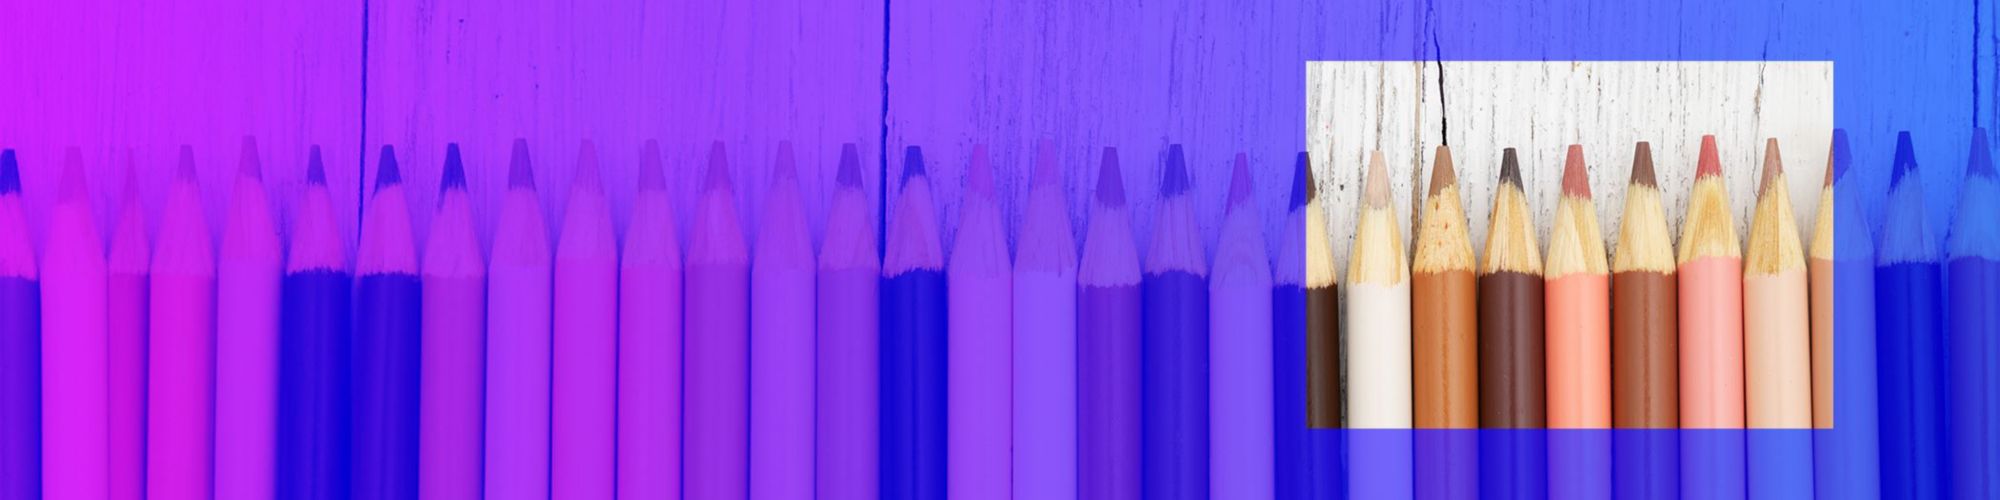 A row of multi-coloured pencils